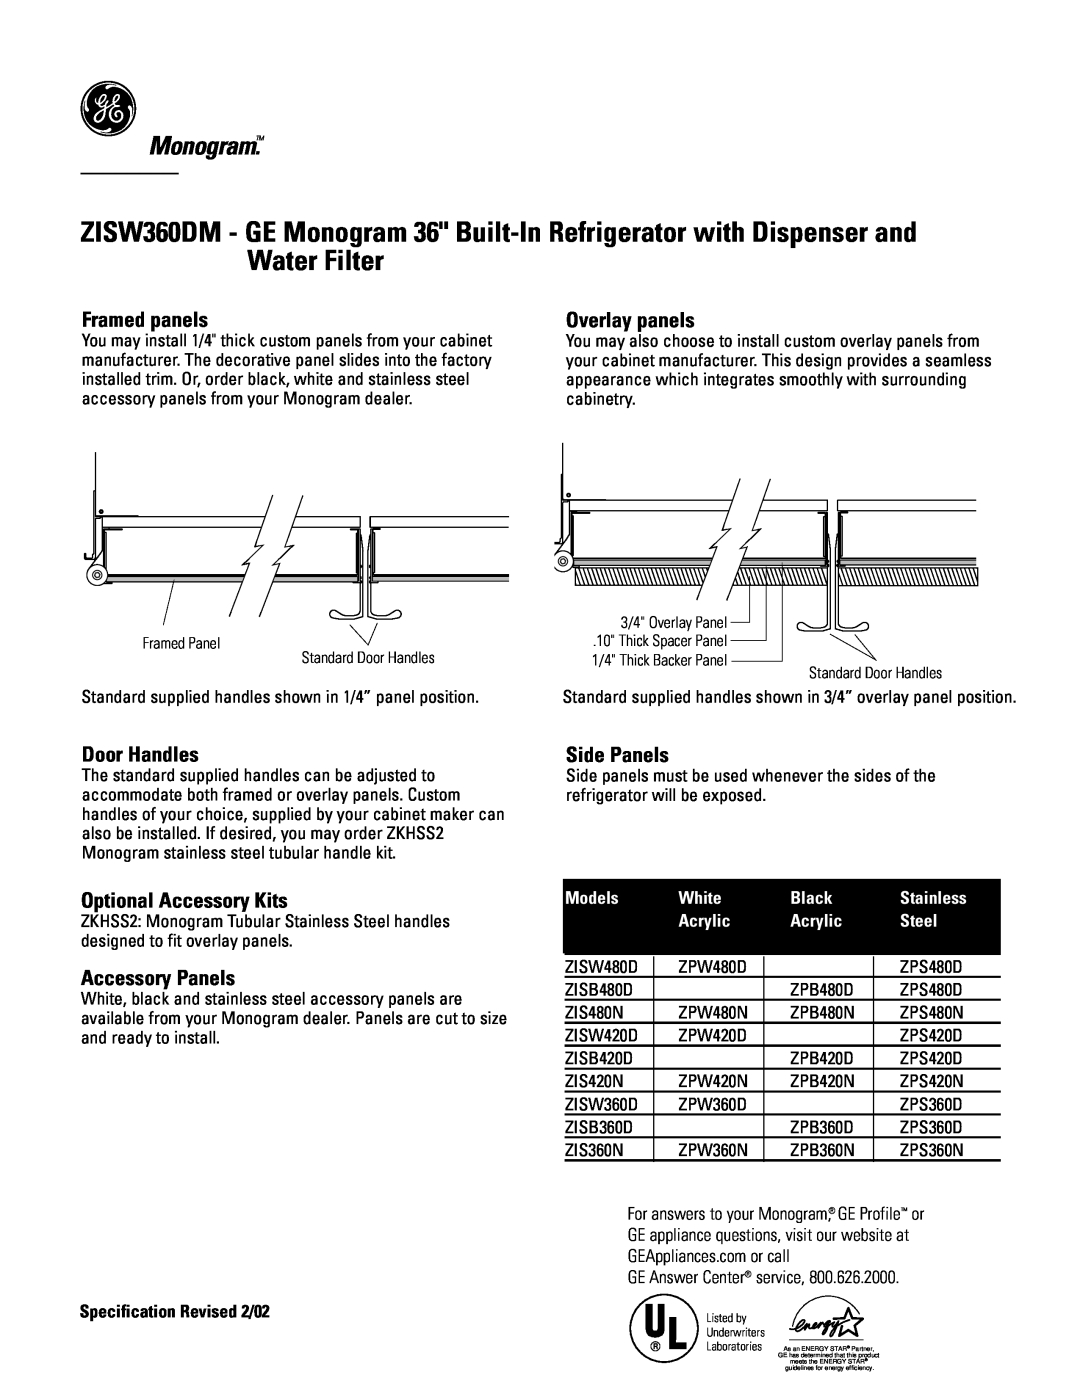 GE Monogram ZISW360DM Framed panels, Overlay panels, Door Handles, Optional Accessory Kits, Accessory Panels, Side Panels 